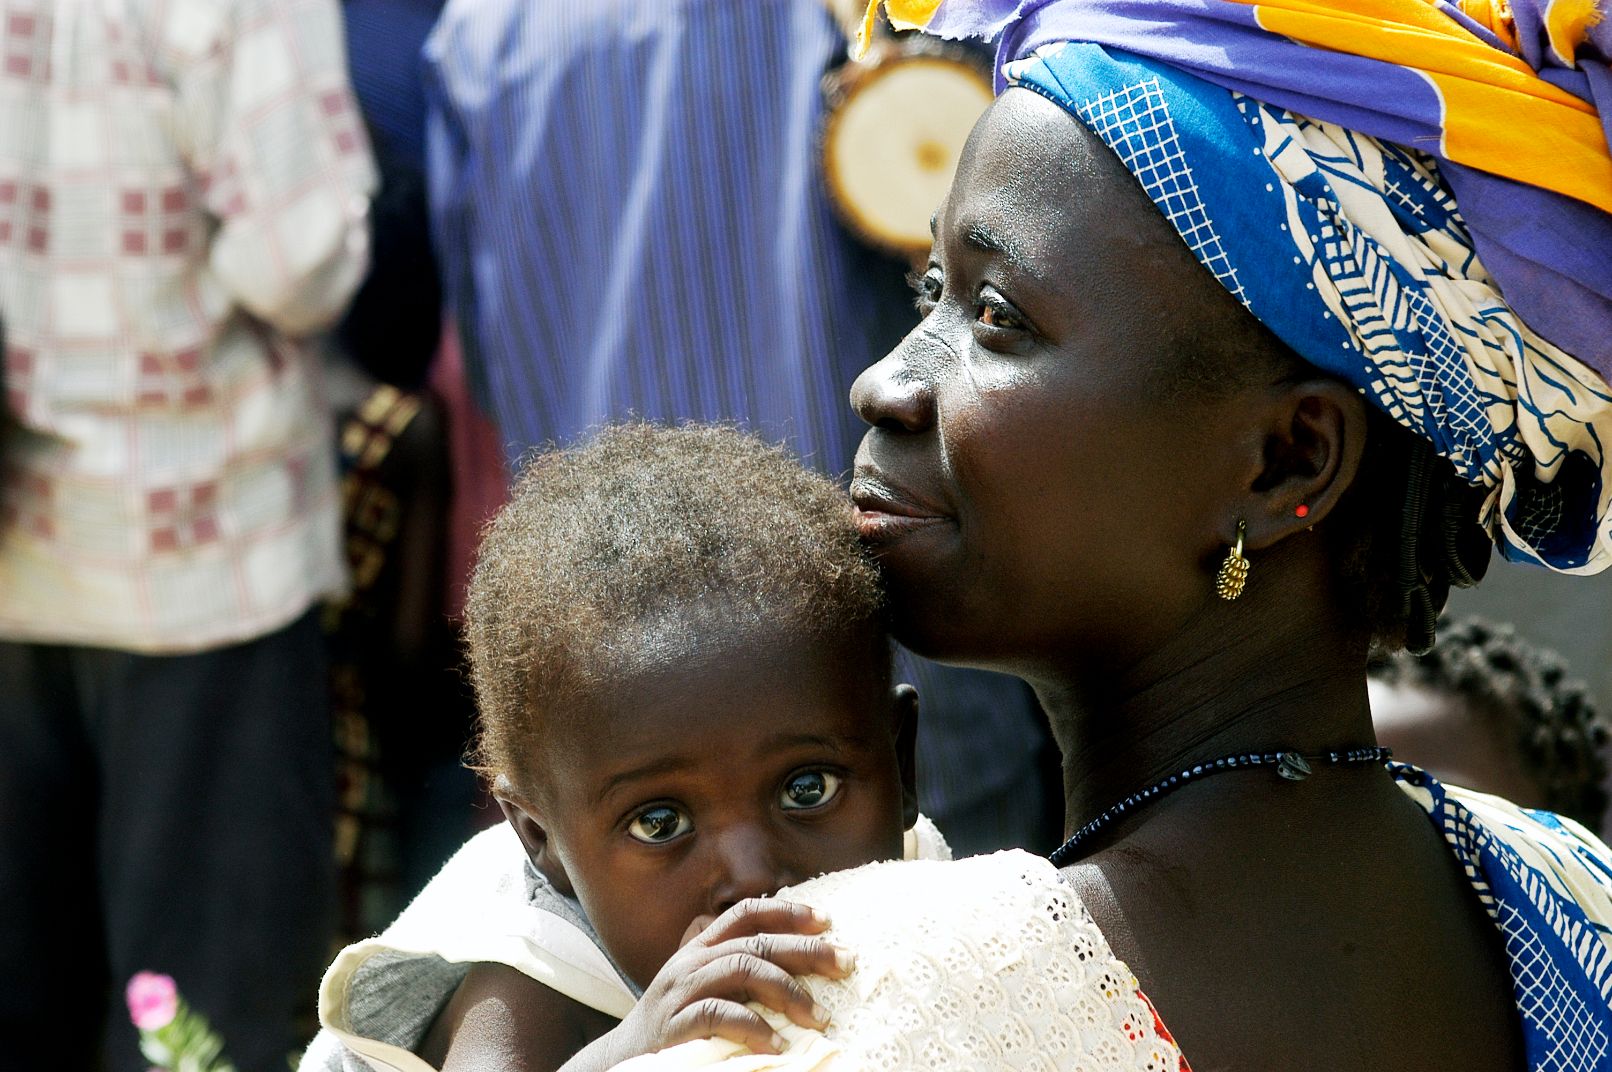 Burkina Faso woman and child